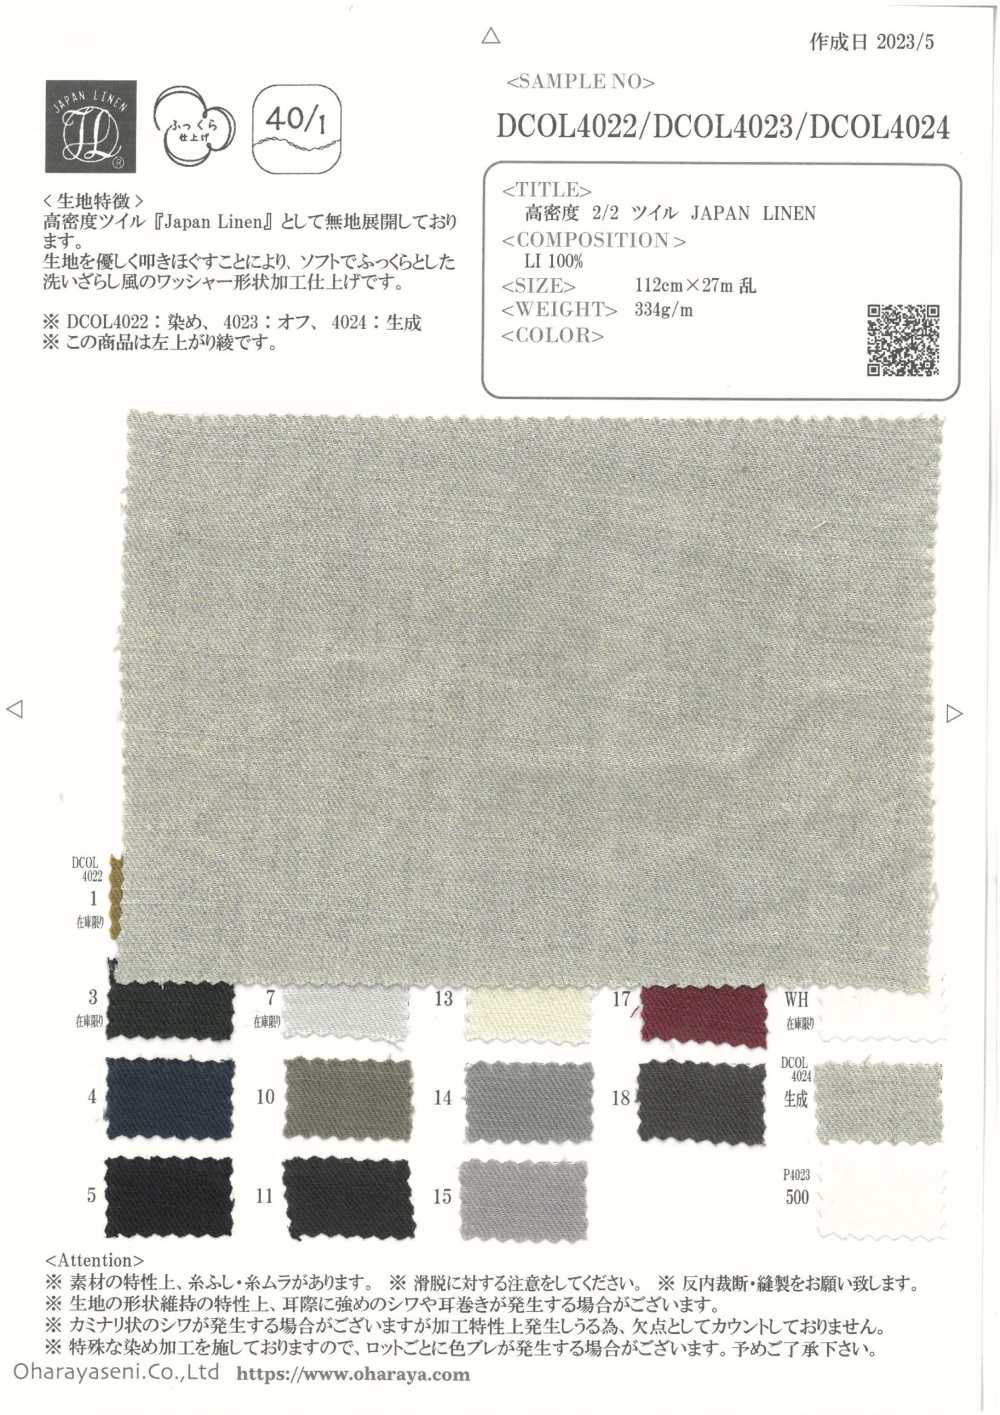 DCOL4022 Sarga 2/2 Alta Densidad LINO JAPÓN[Fabrica Textil] Oharayaseni